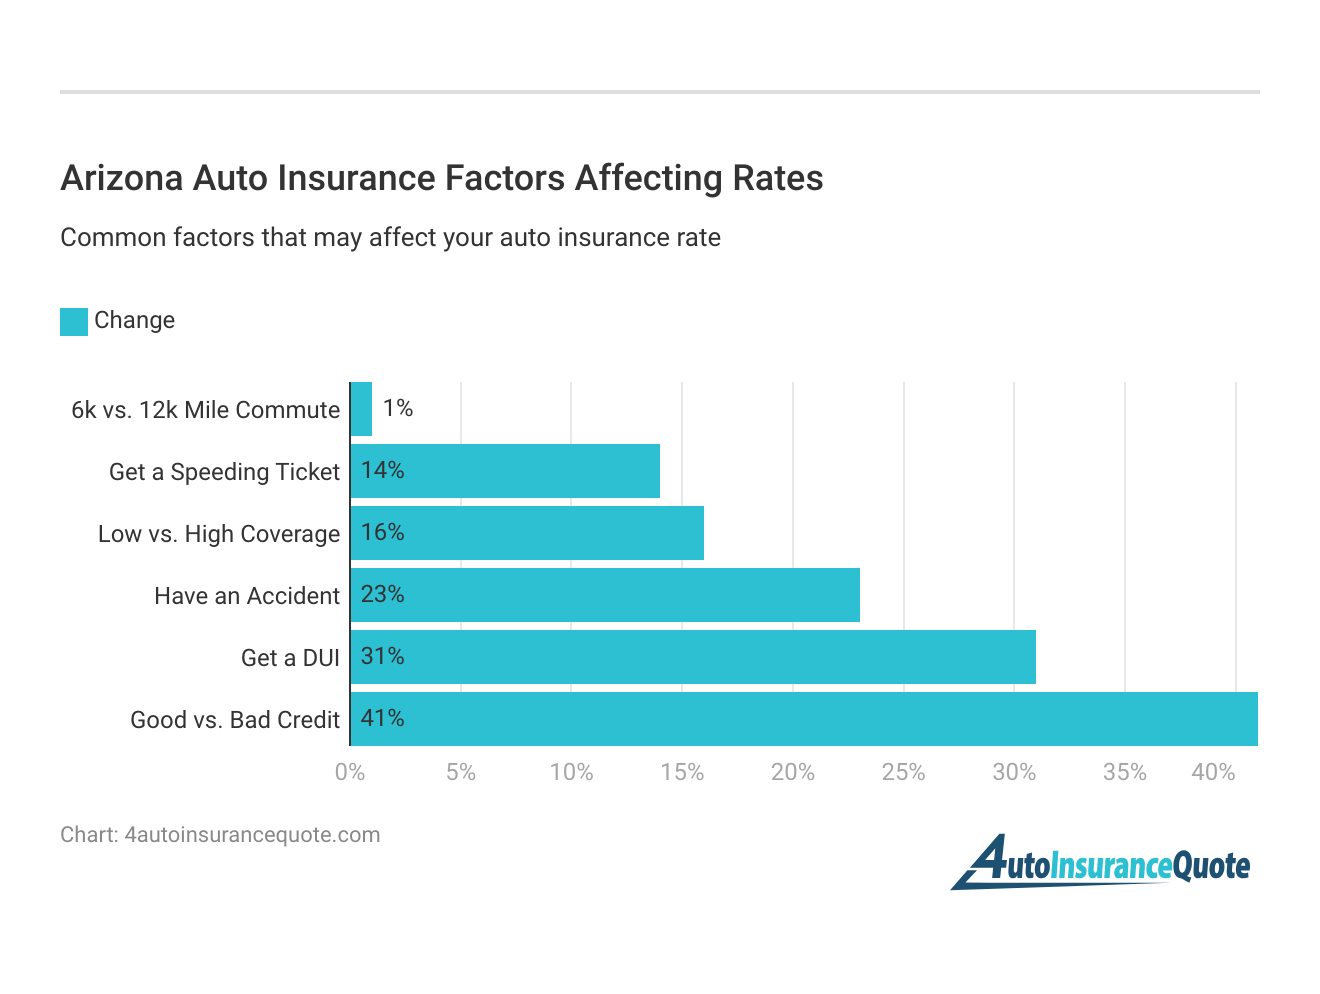 <h3>Arizona Auto Insurance Factors Affecting Rates</h3>